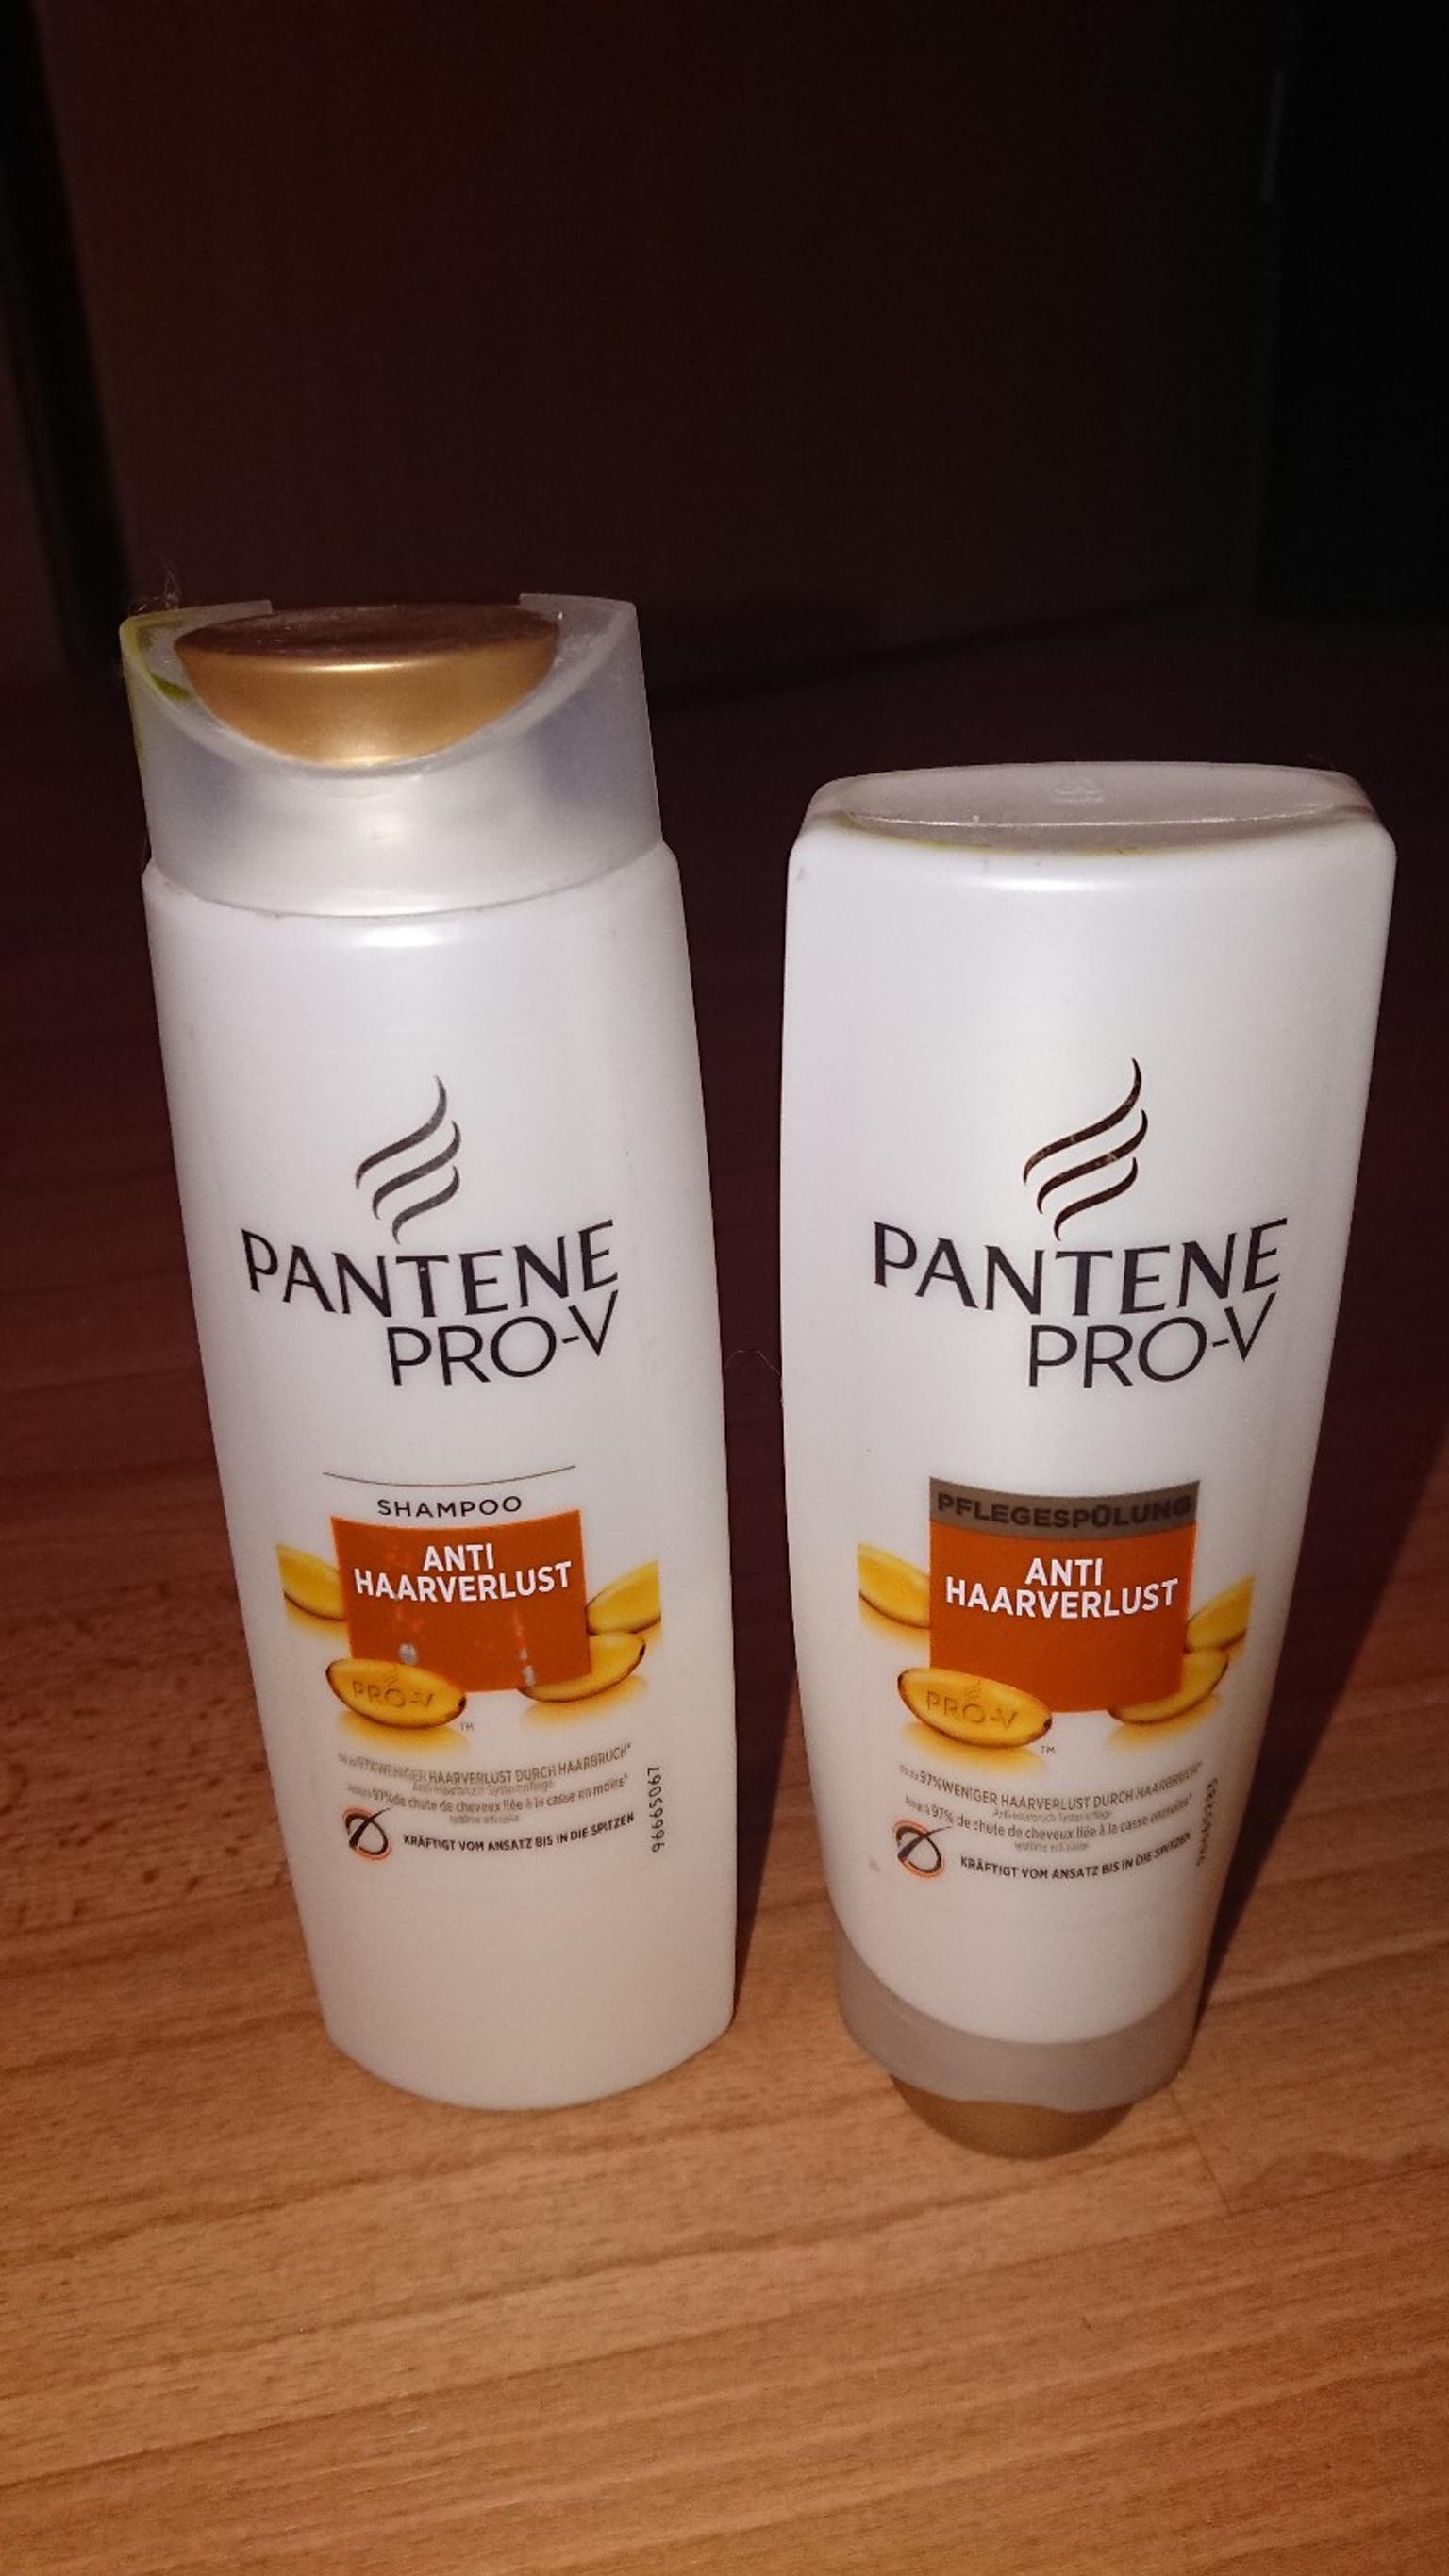 Pantene Prov Anti Haarverlust Shampoo Spulung In Chemnitz For 1 50 For Sale Shpock